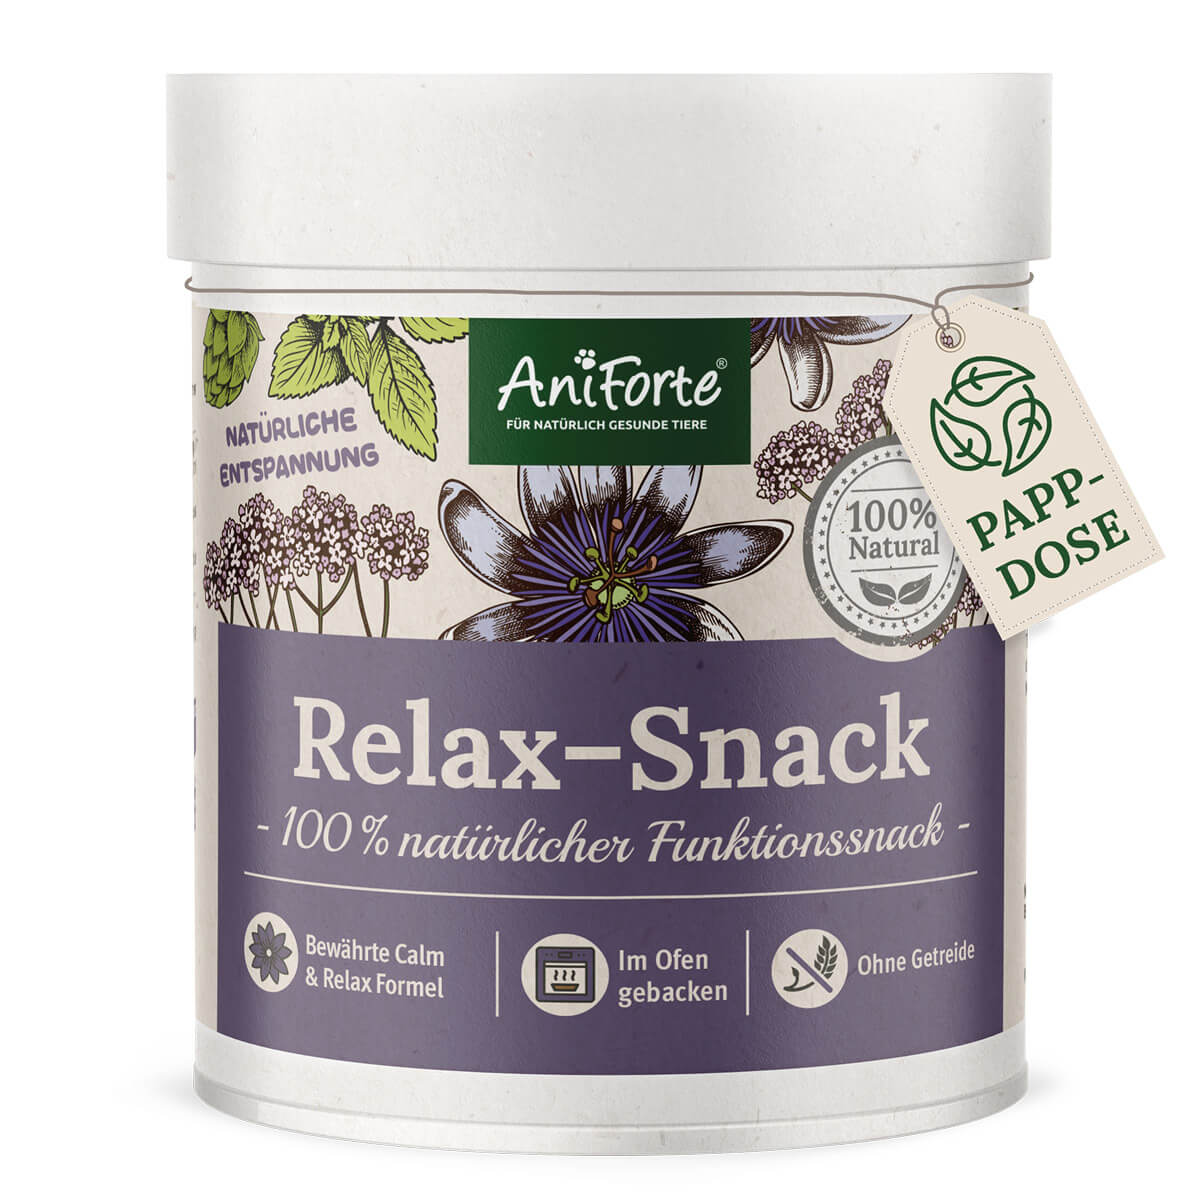 Relax-Snack - AniForte